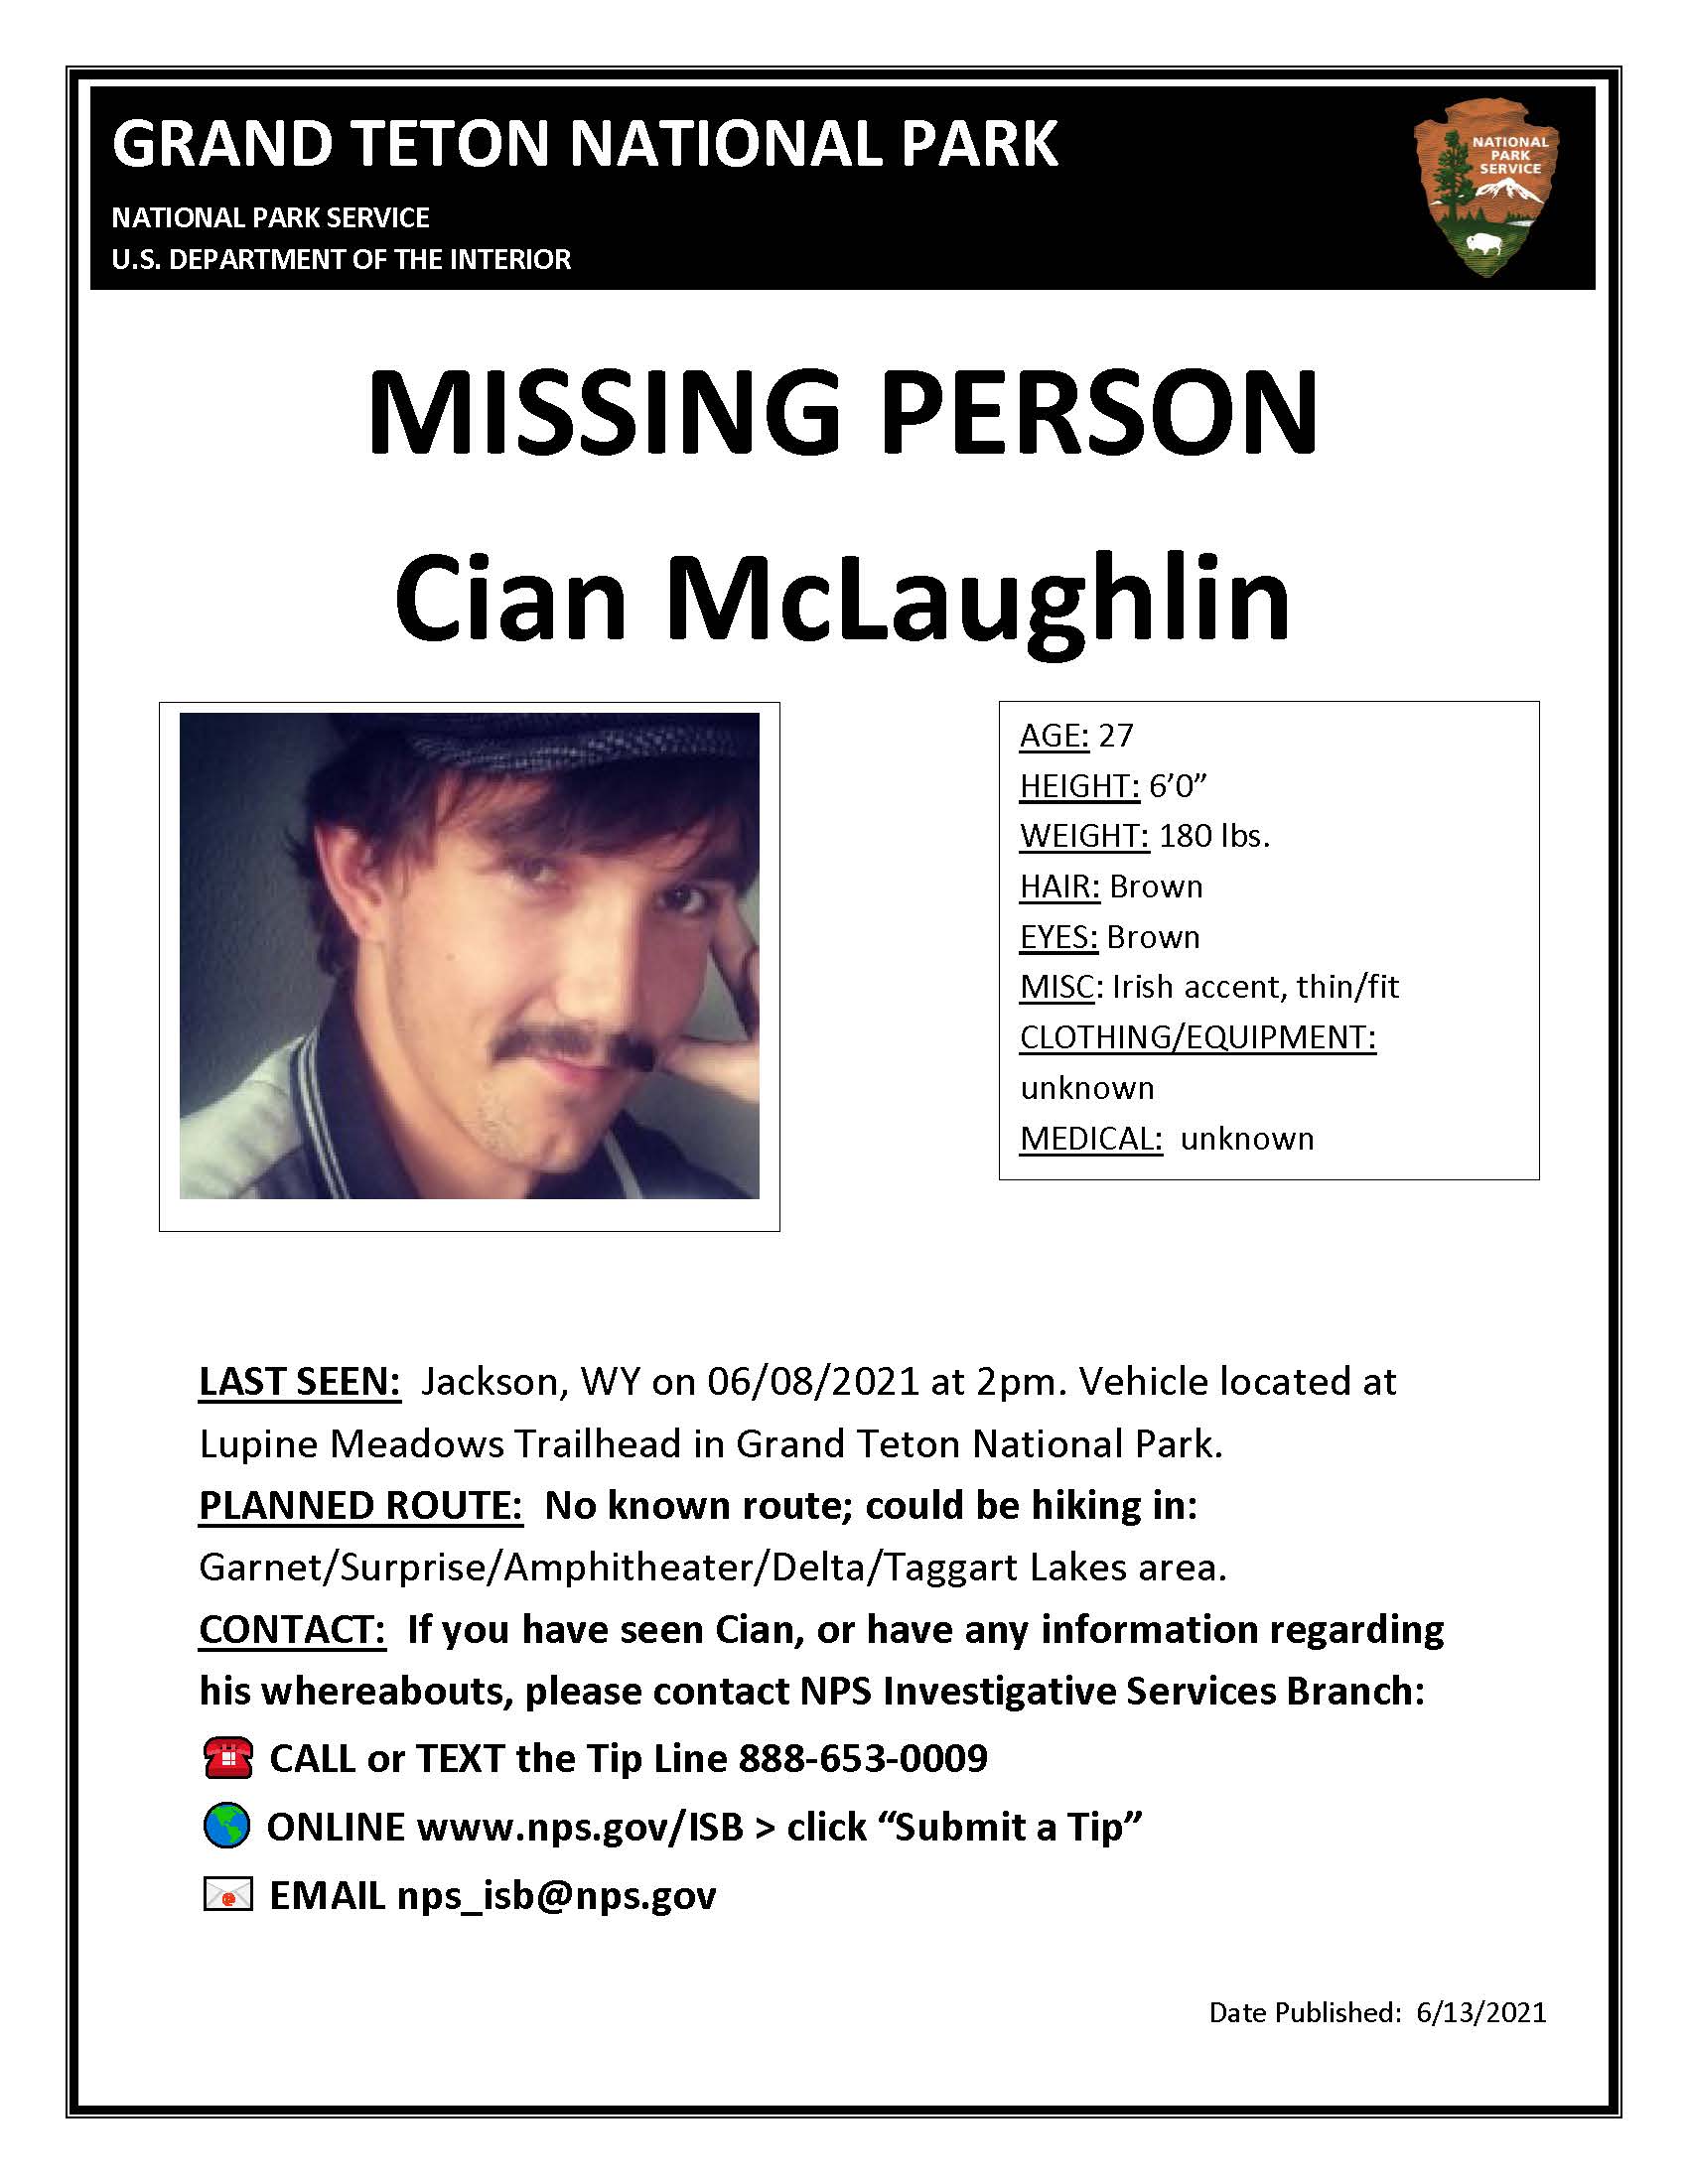 Missing person Cian McLaughlin description